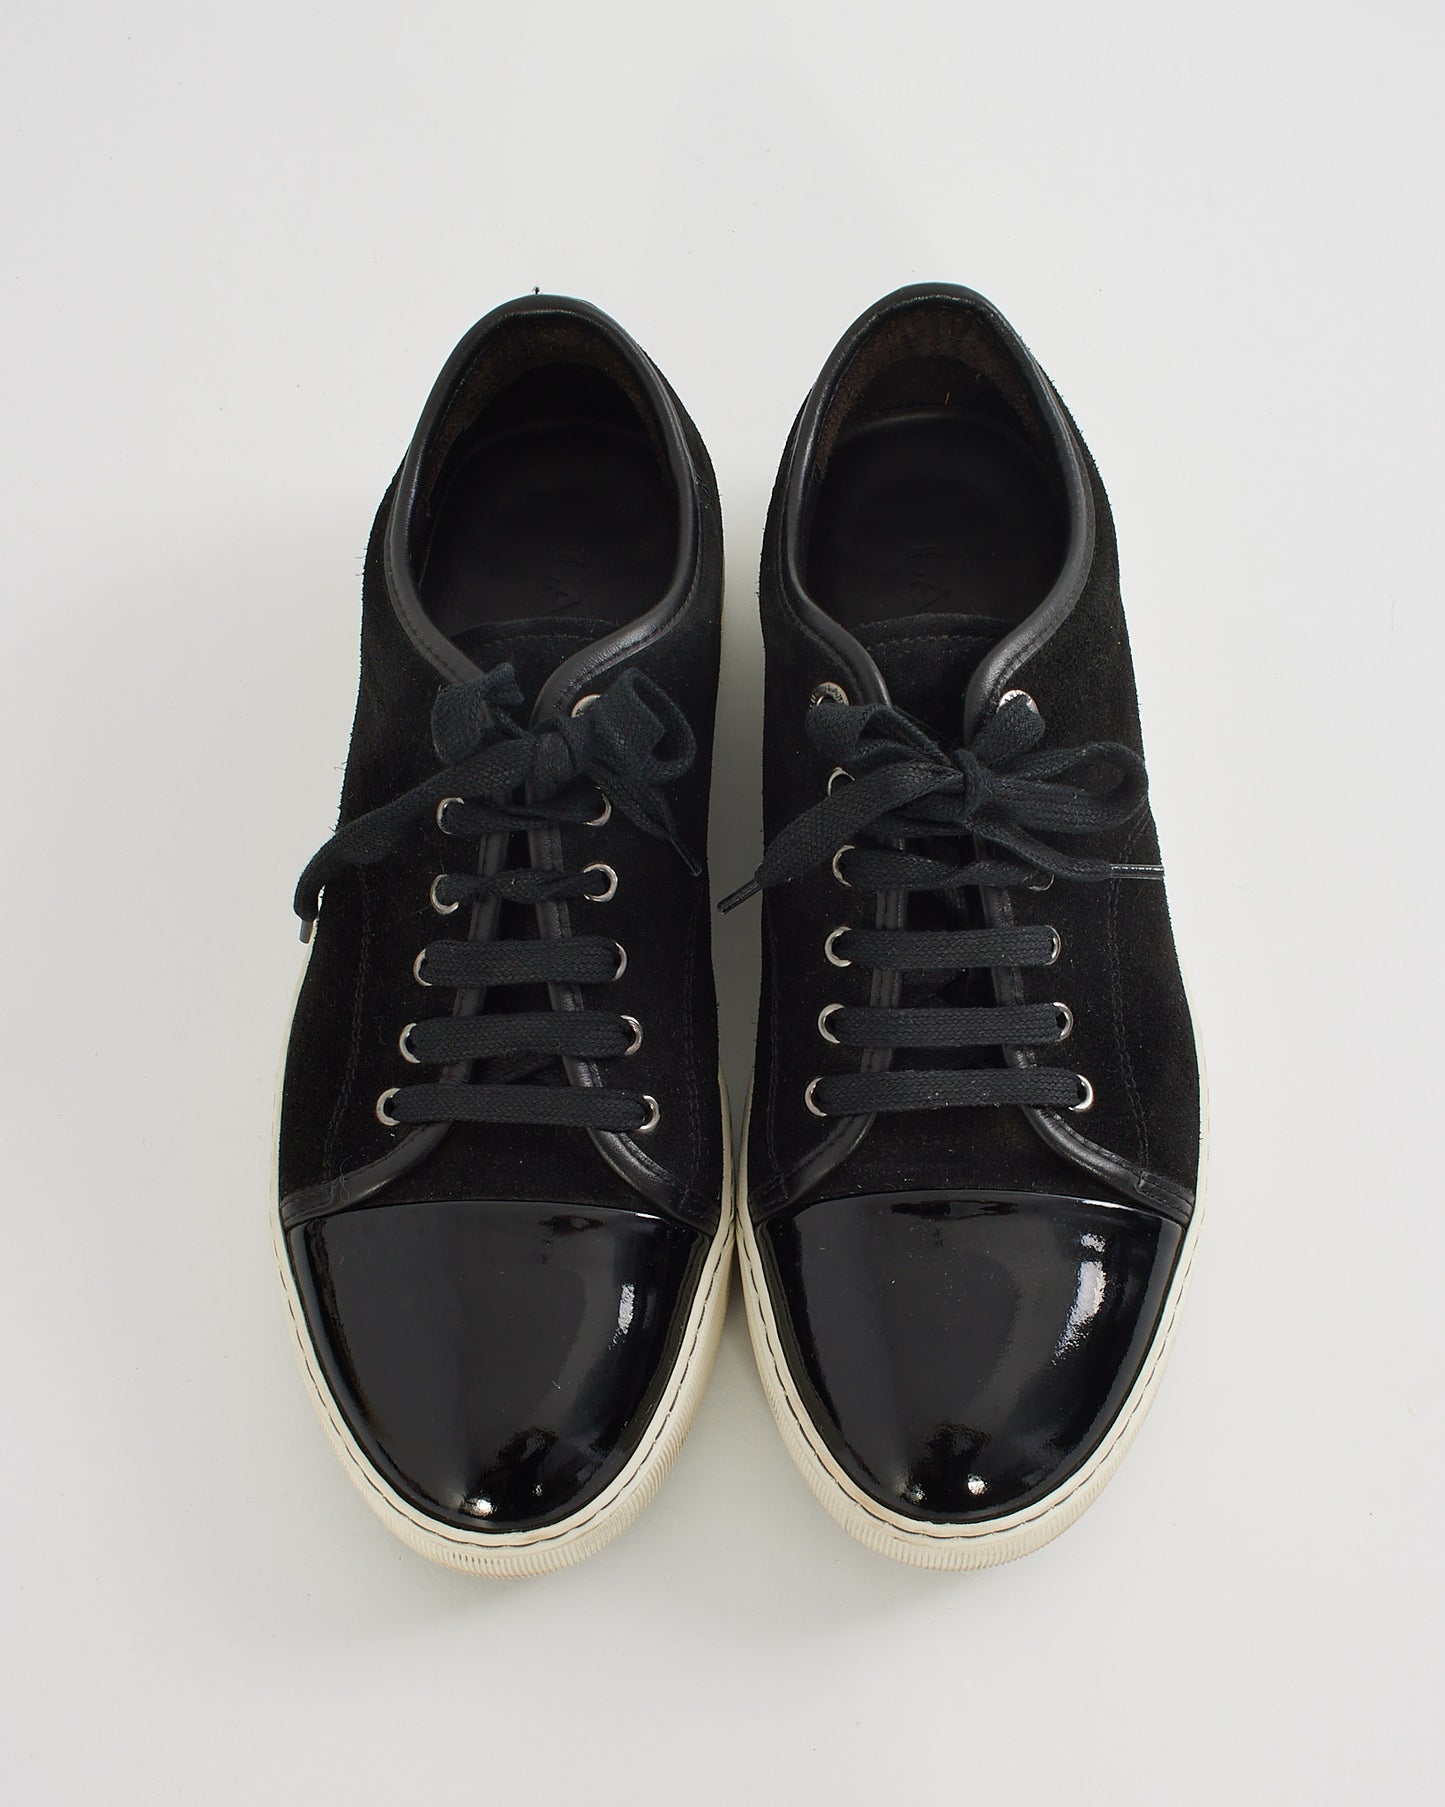 Lanvin Men's Black Suede DBB1 Low Top Sneakers - 8